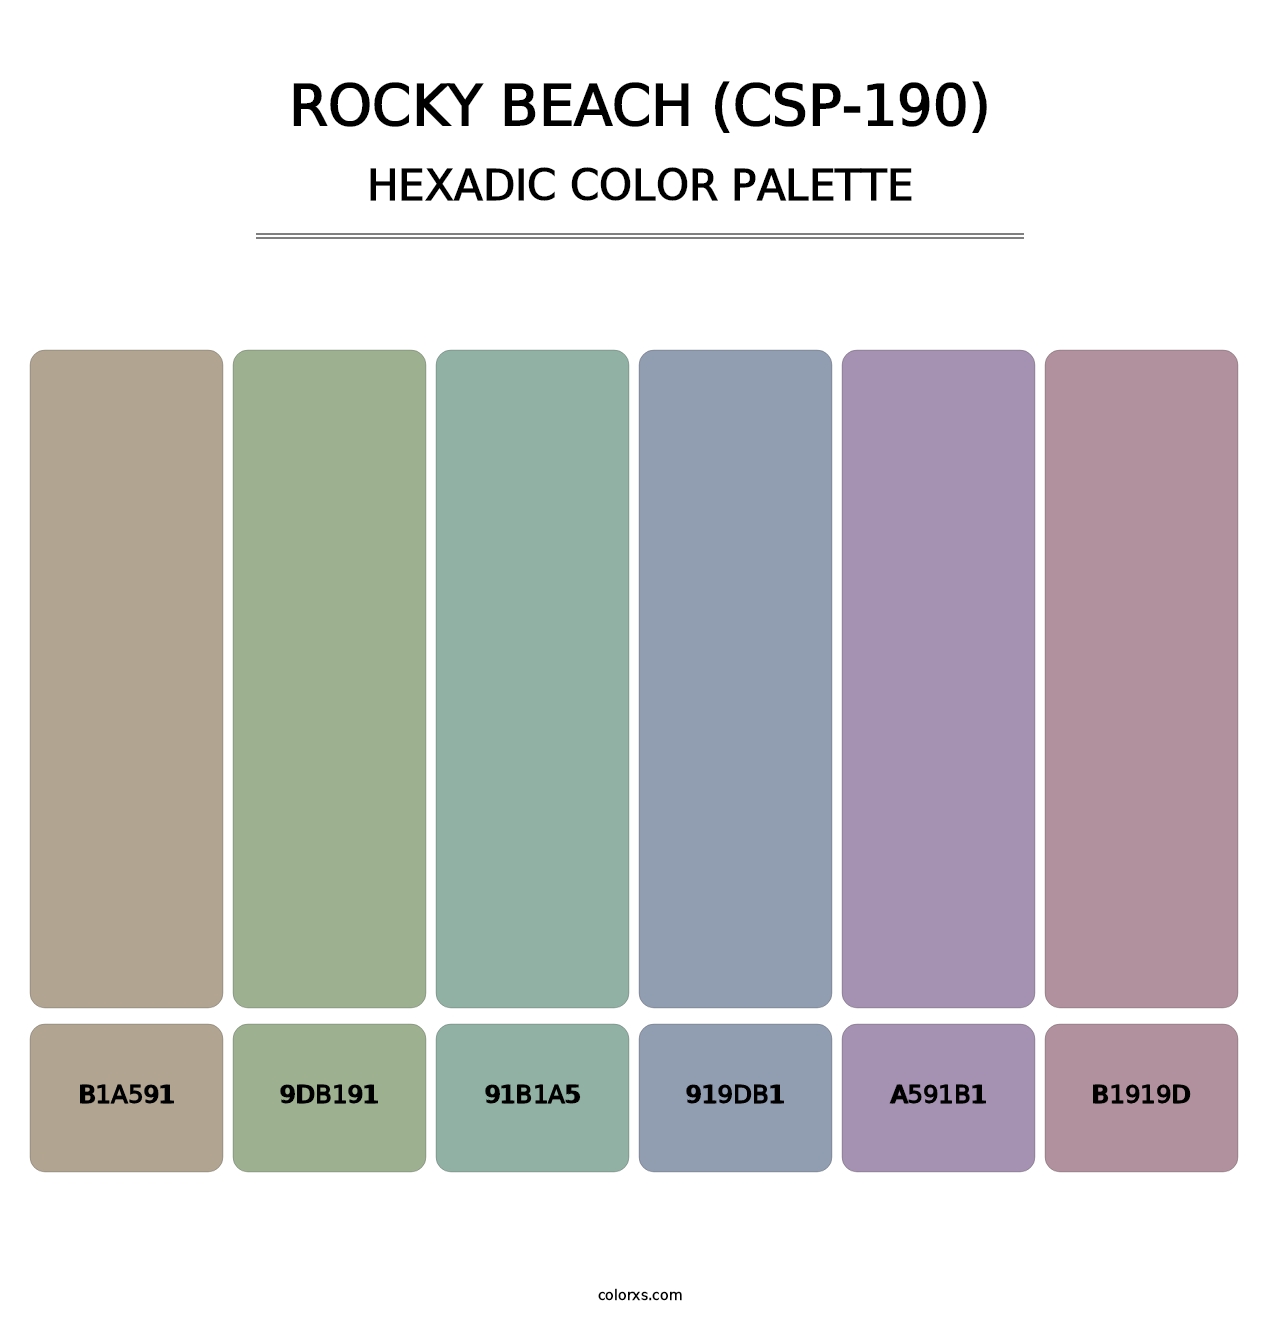 Rocky Beach (CSP-190) - Hexadic Color Palette